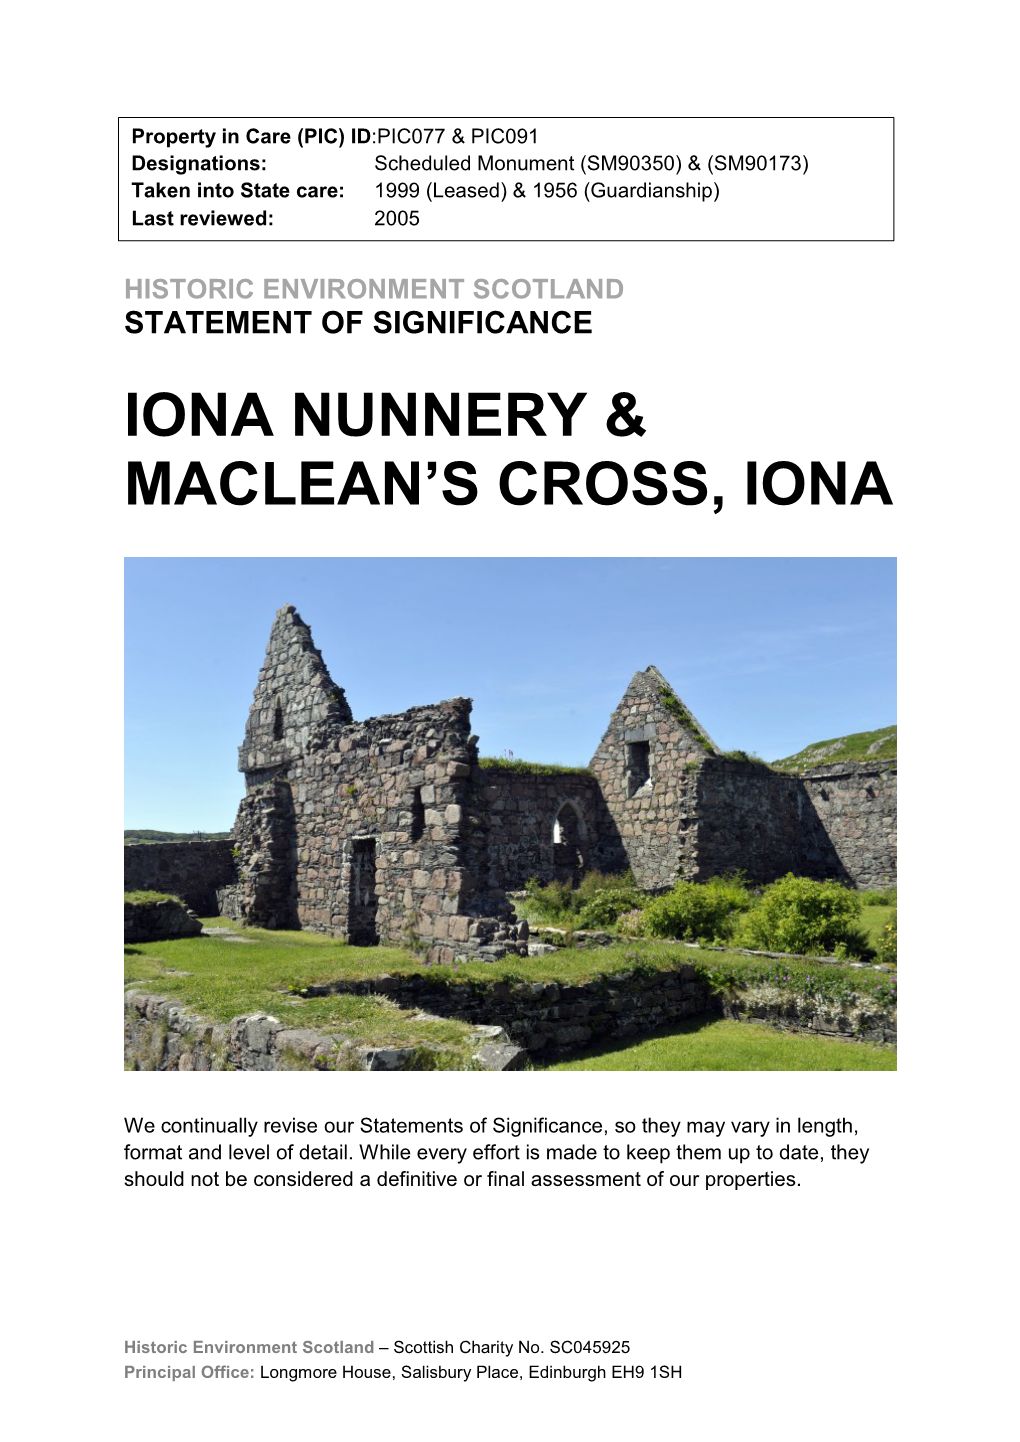 Iona Nunnery & Maclean's Cross, Iona